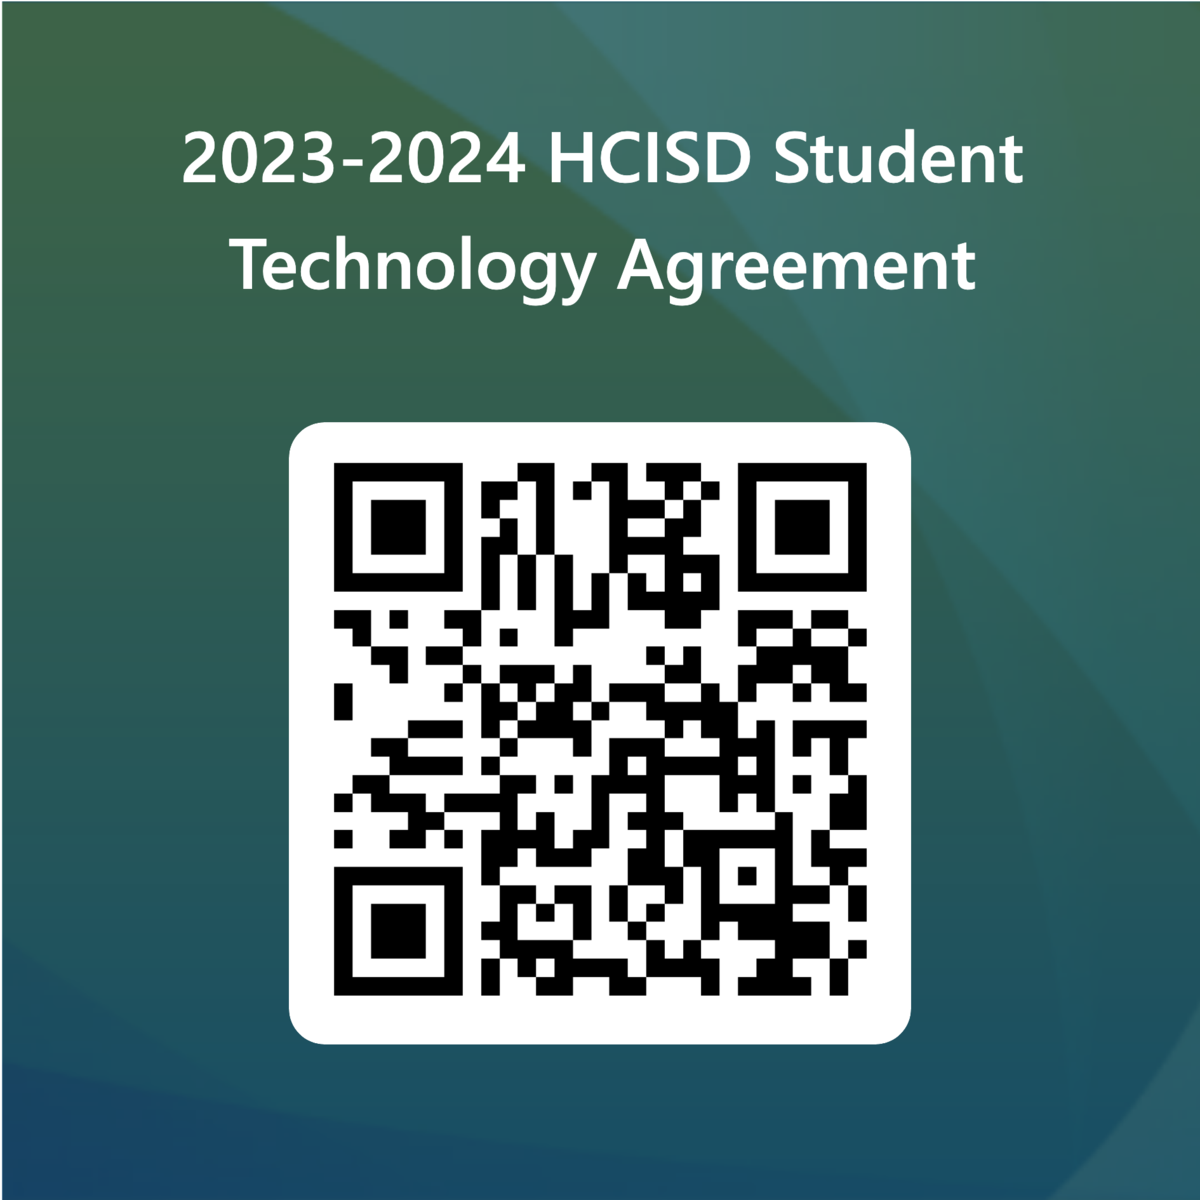 23-24 Student Technology Agreement